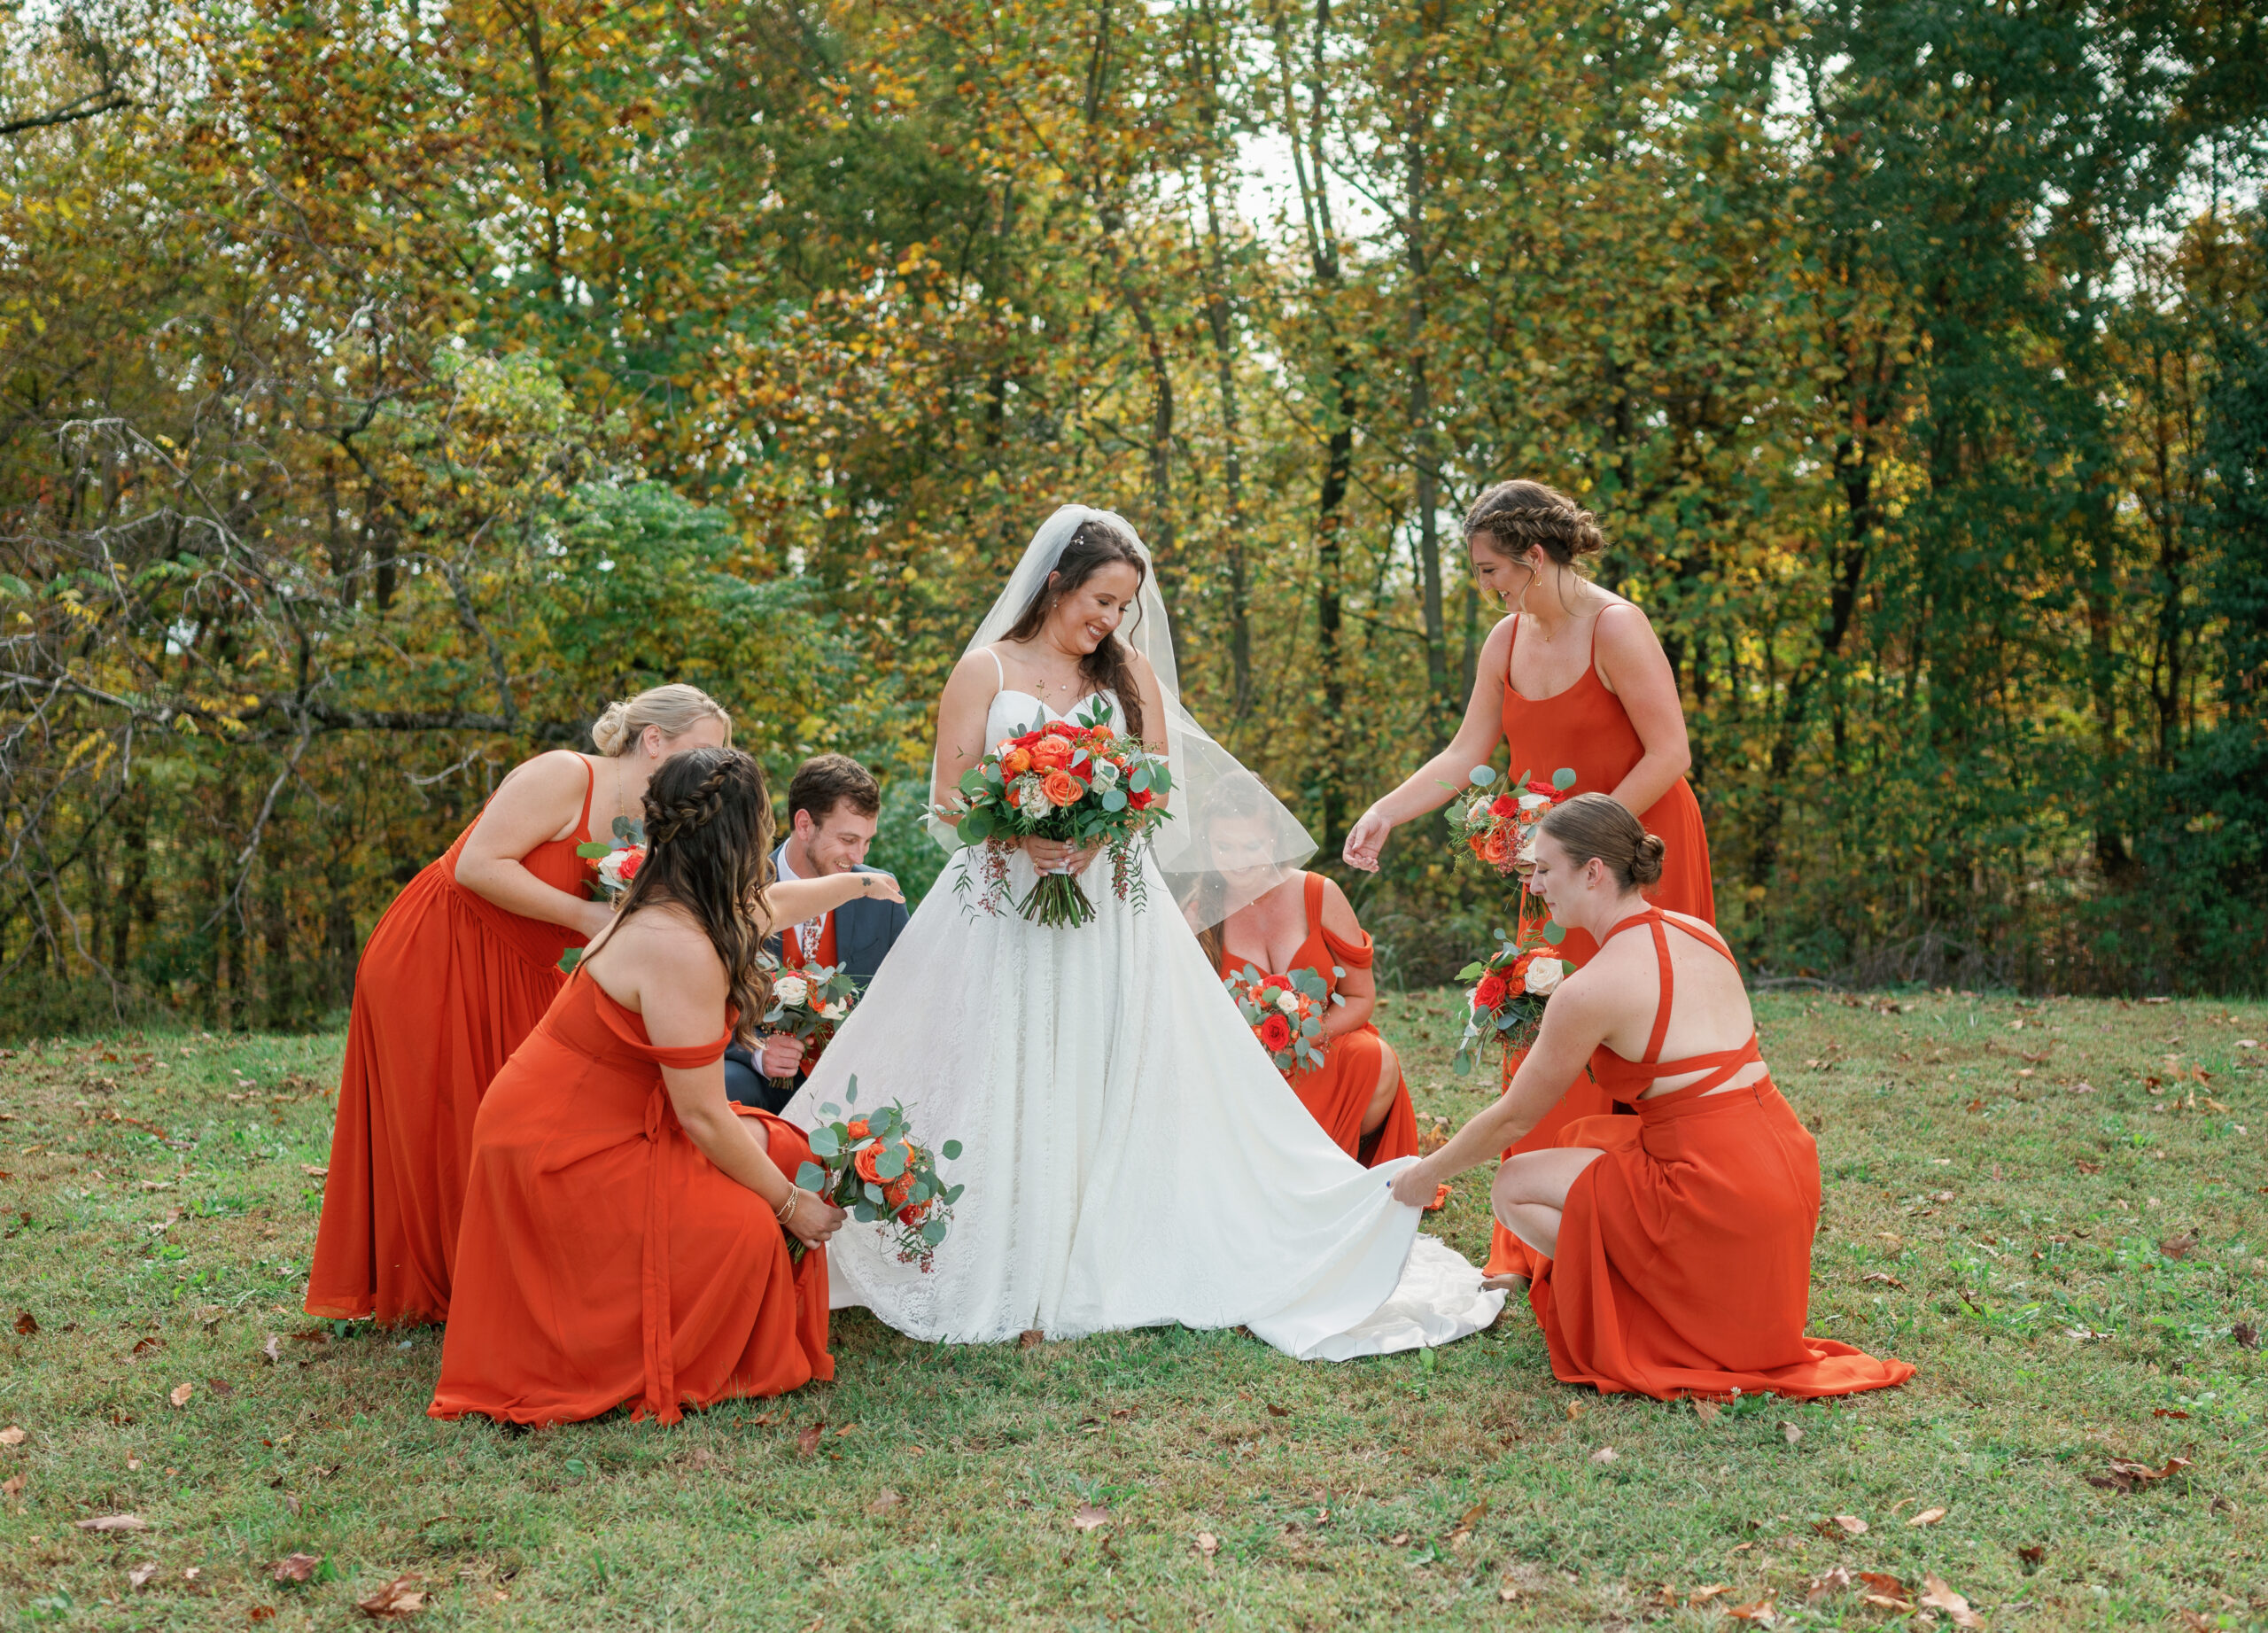 Bridesmaids fluffing Nashville bride's dress